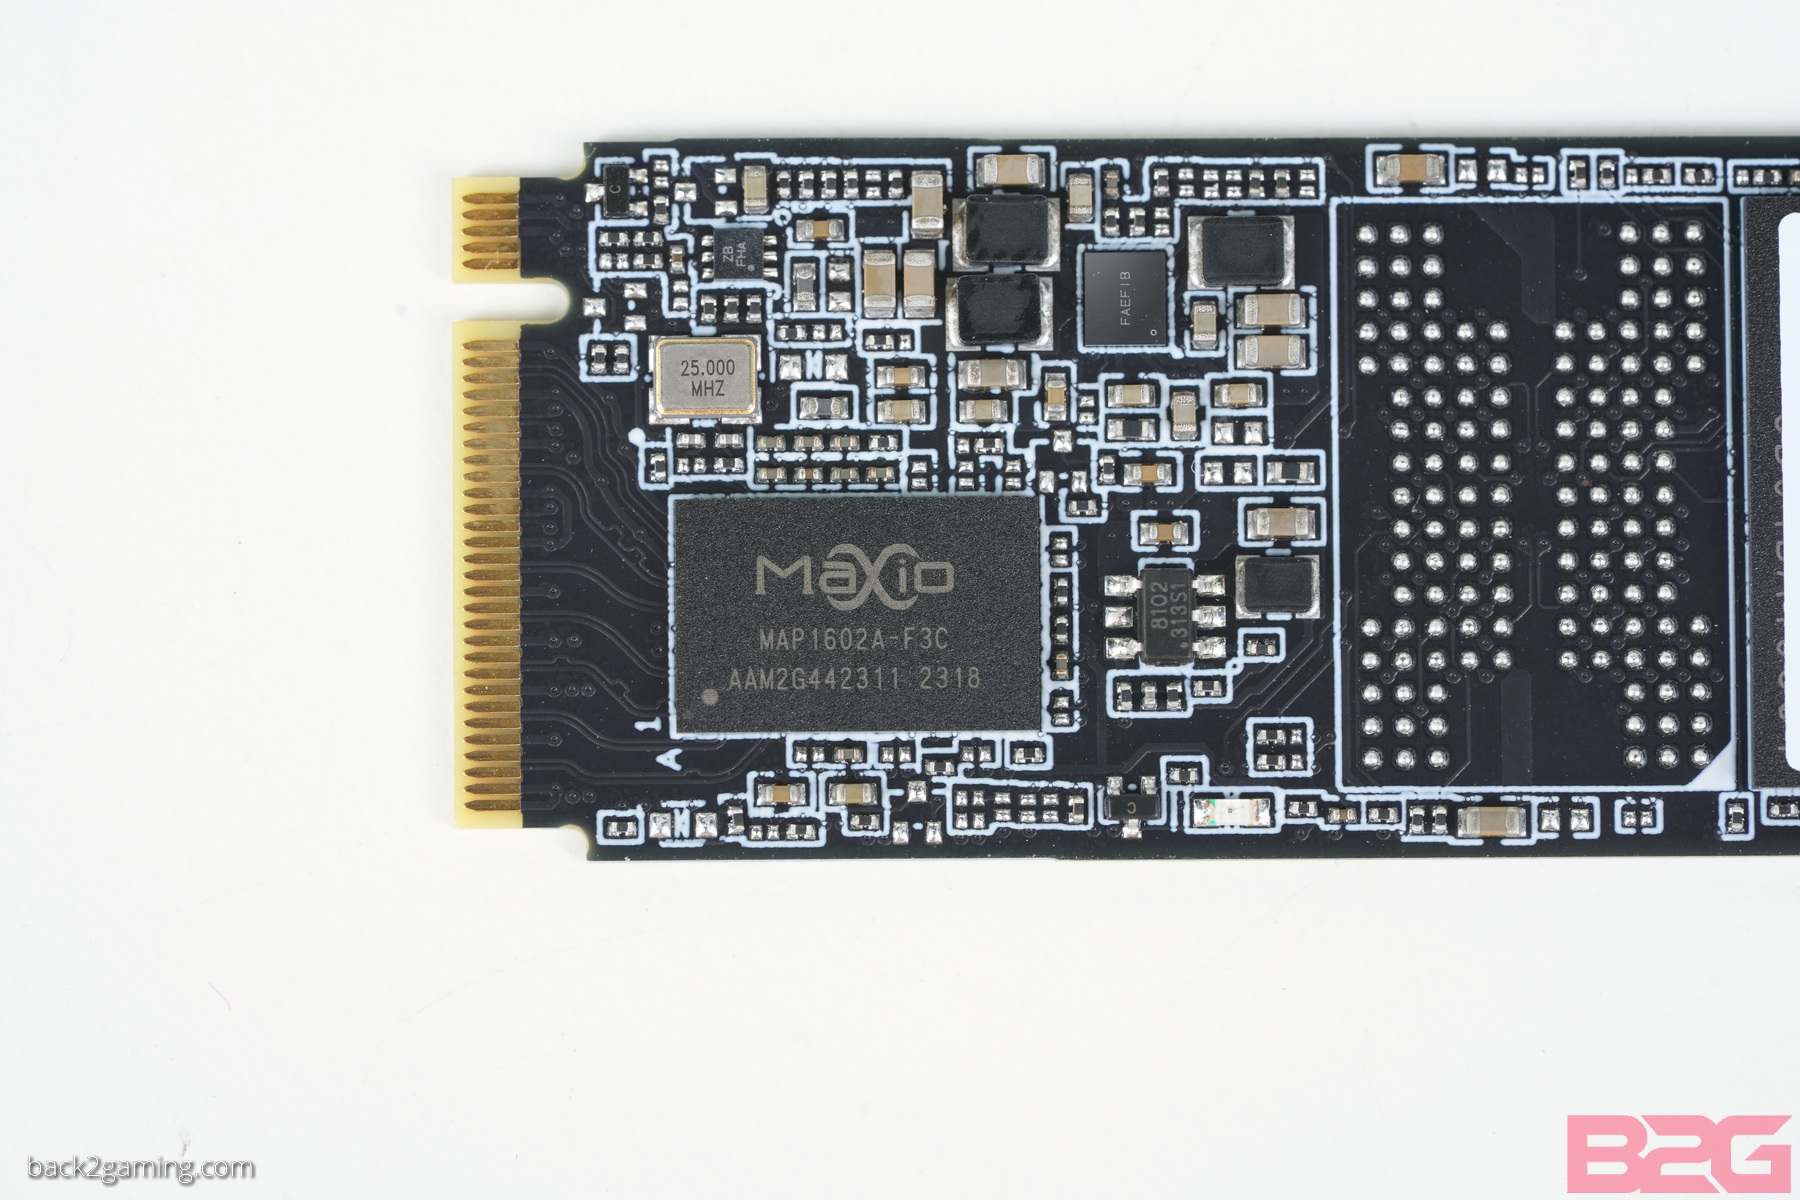 Netac NV7000-t Gen4 NVMe M.2 SSD Review - NV7000-t